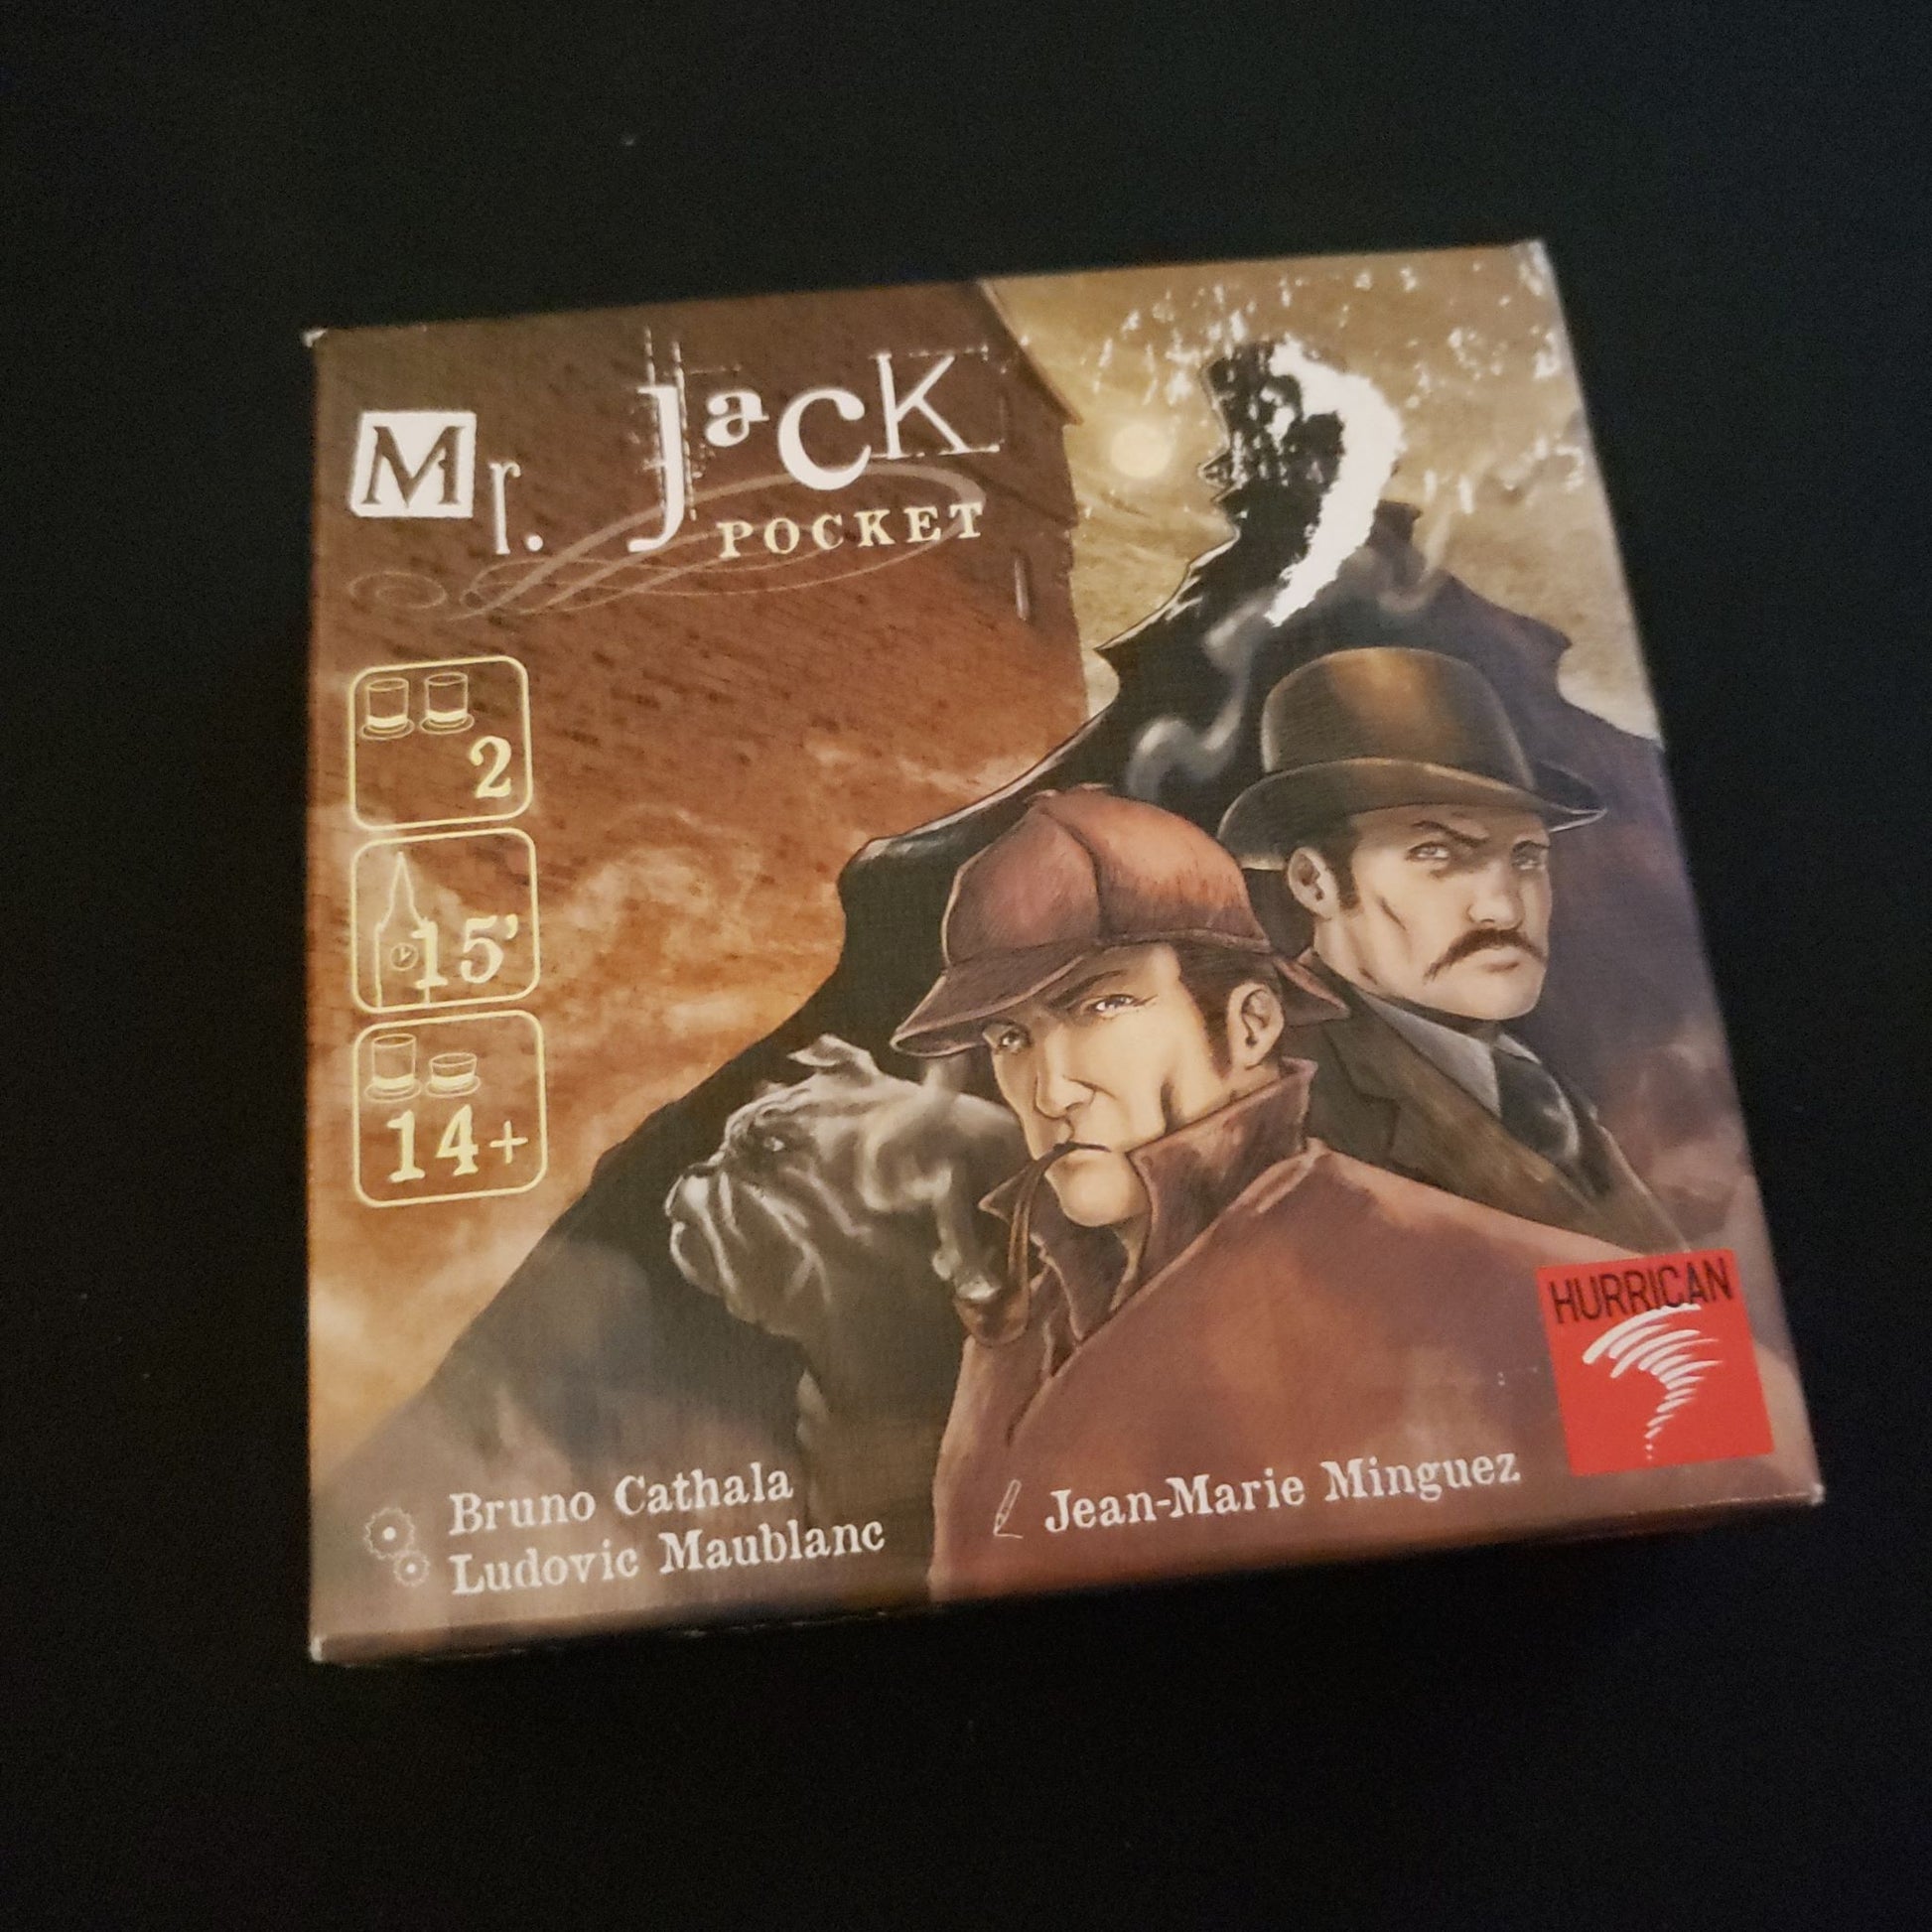 Mr Jack Pocket card game - front cover of box